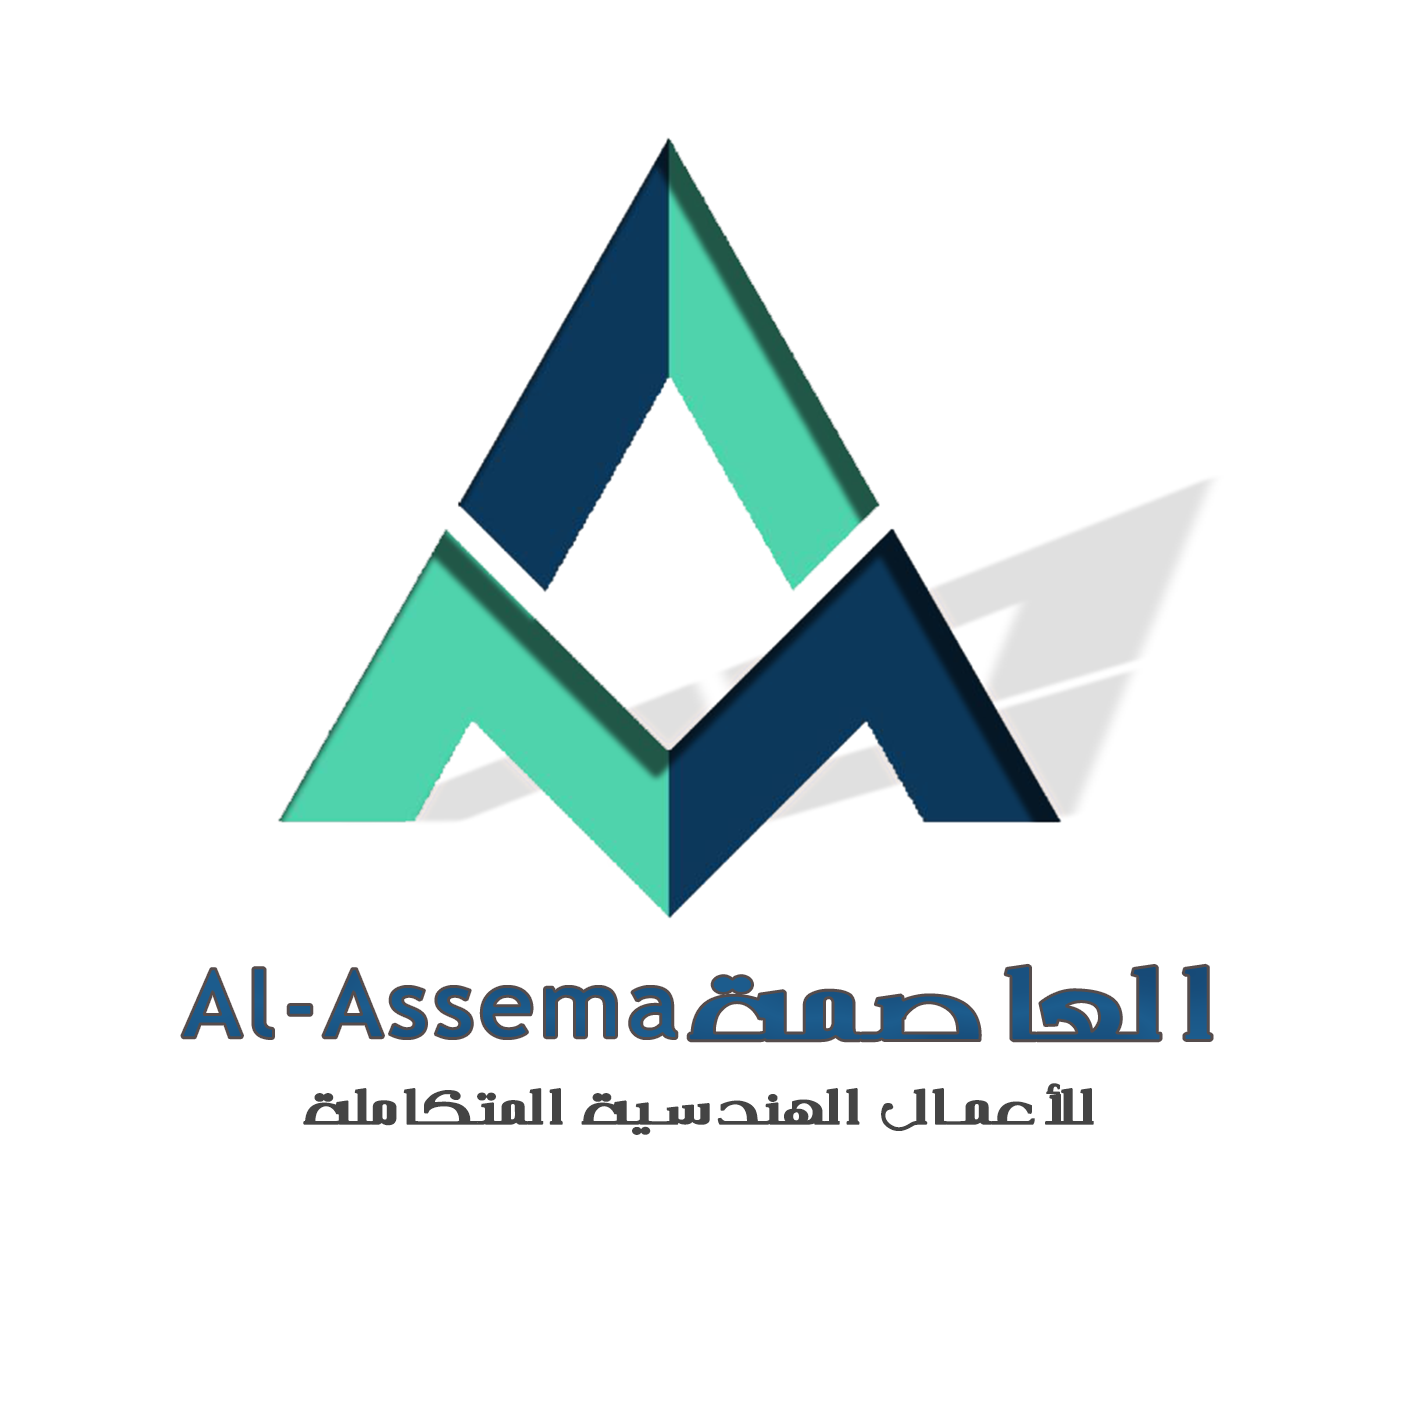 Al-assema